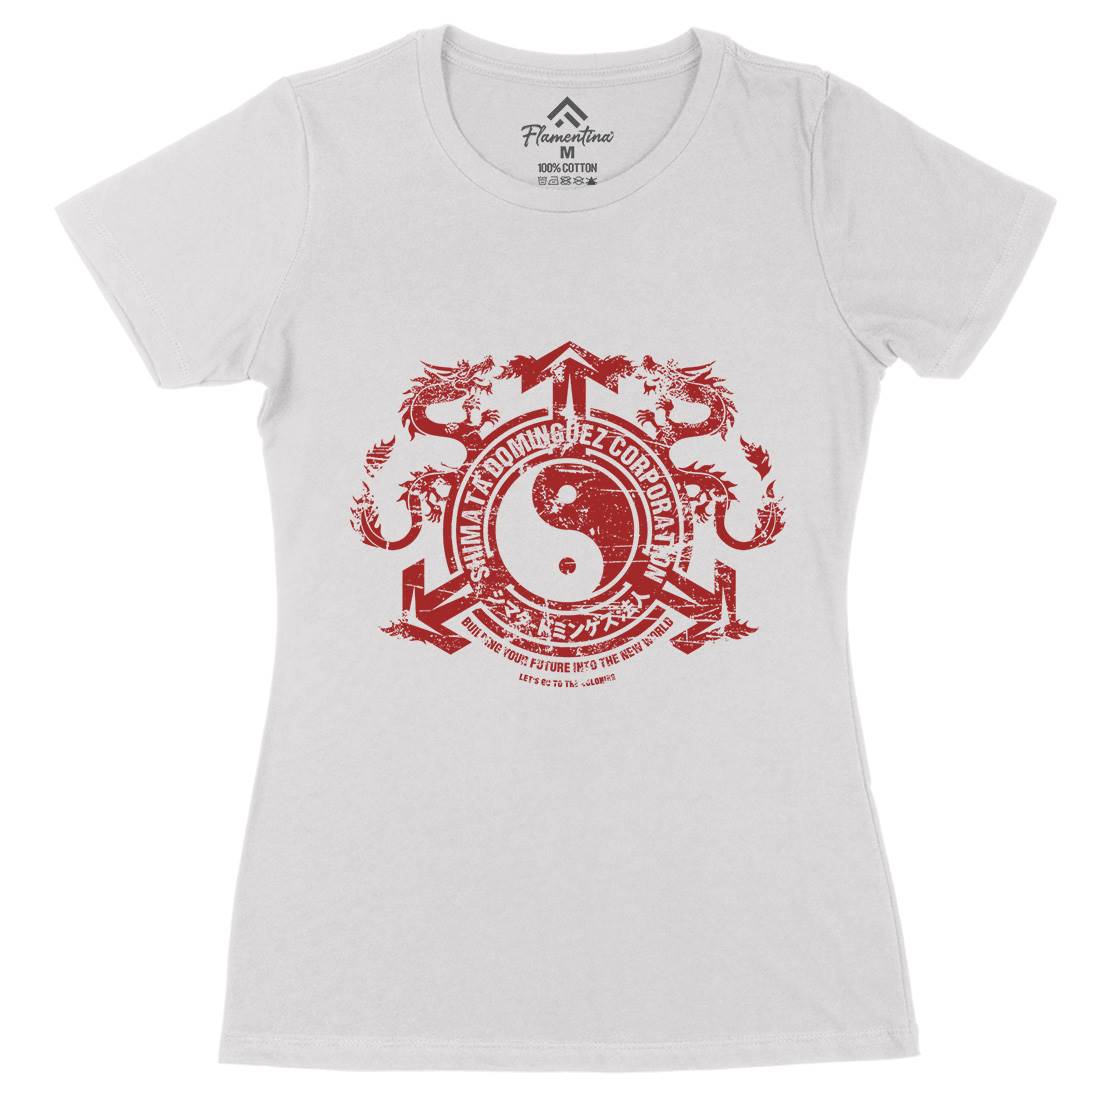 Shimata Dominguez Womens Organic Crew Neck T-Shirt Space D325